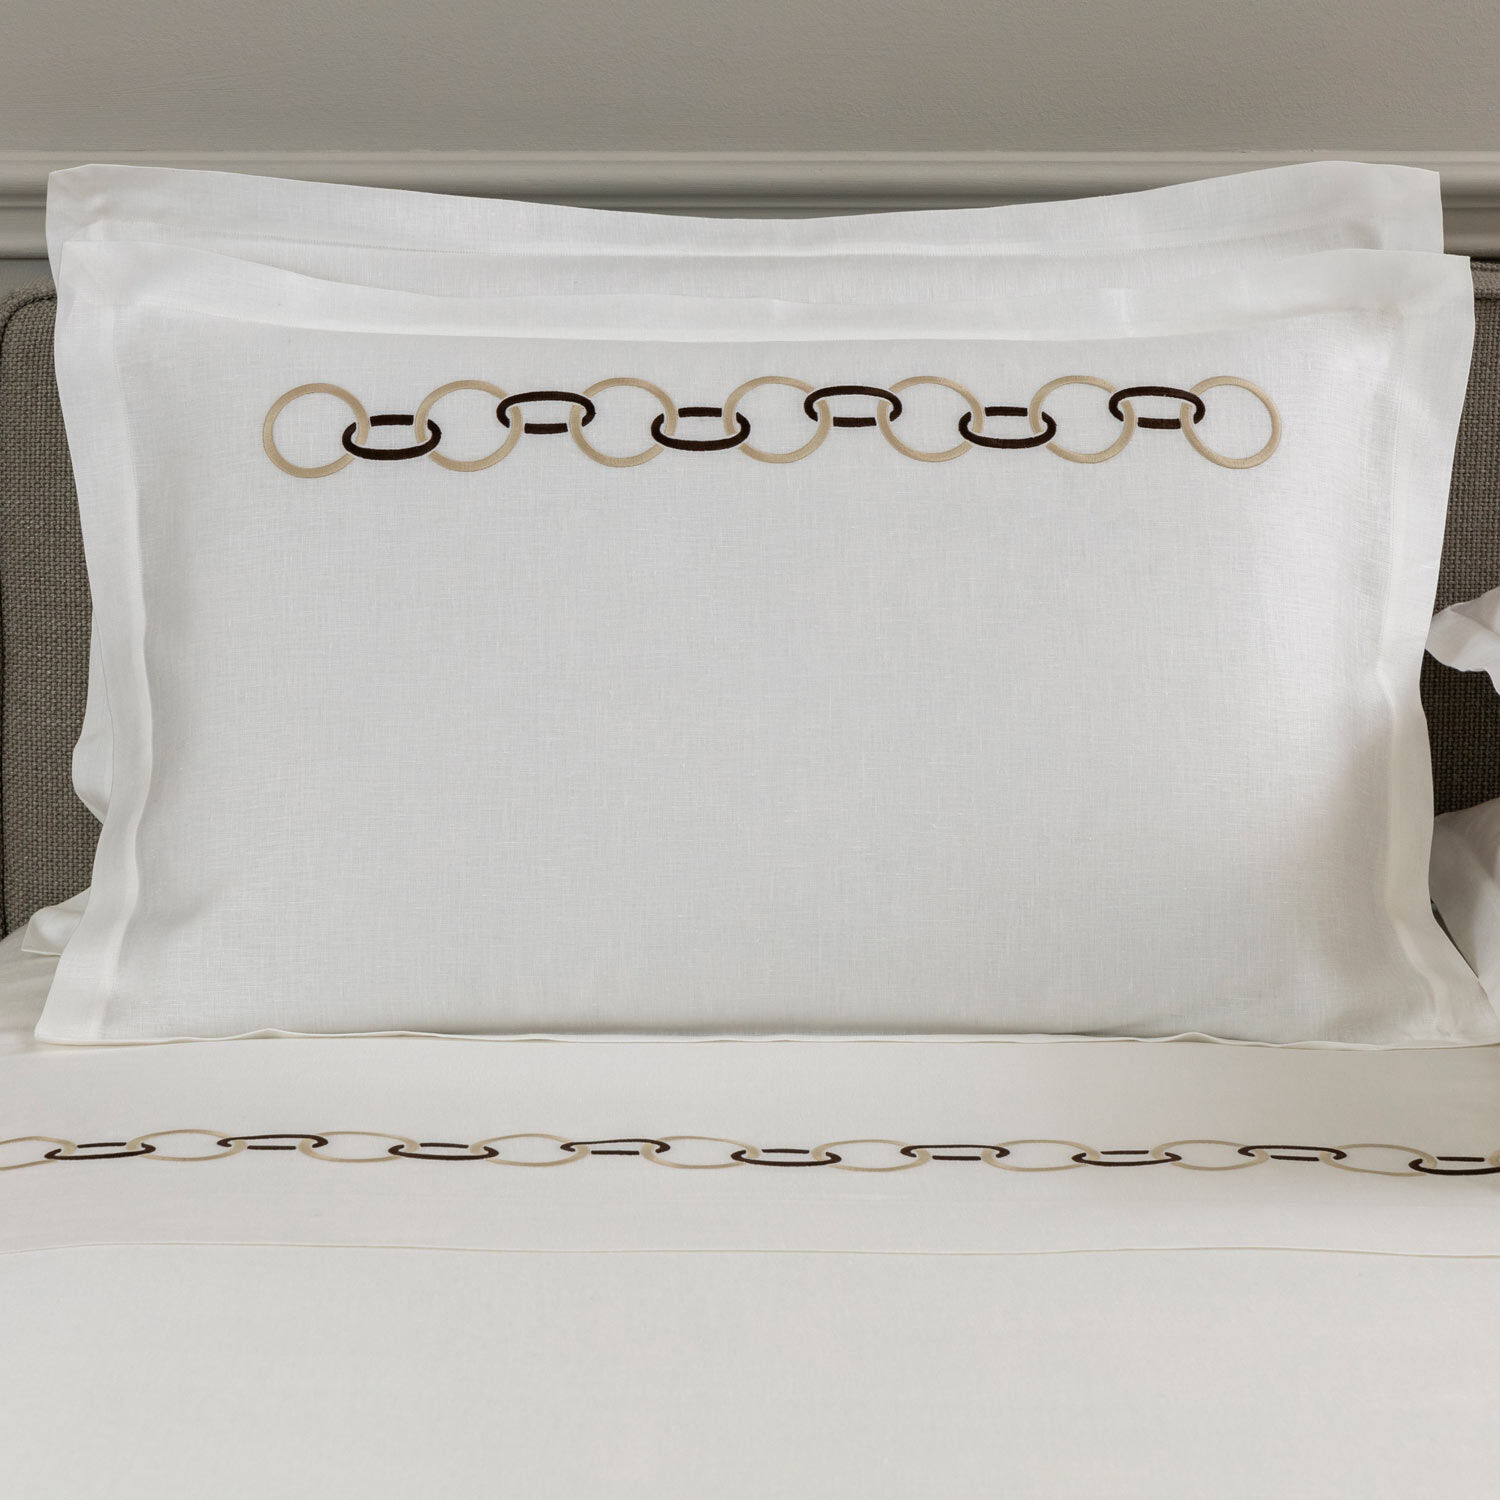 NEW Frette BISCAY Set of 2 King Pillow Shams White Embroidered Sham 